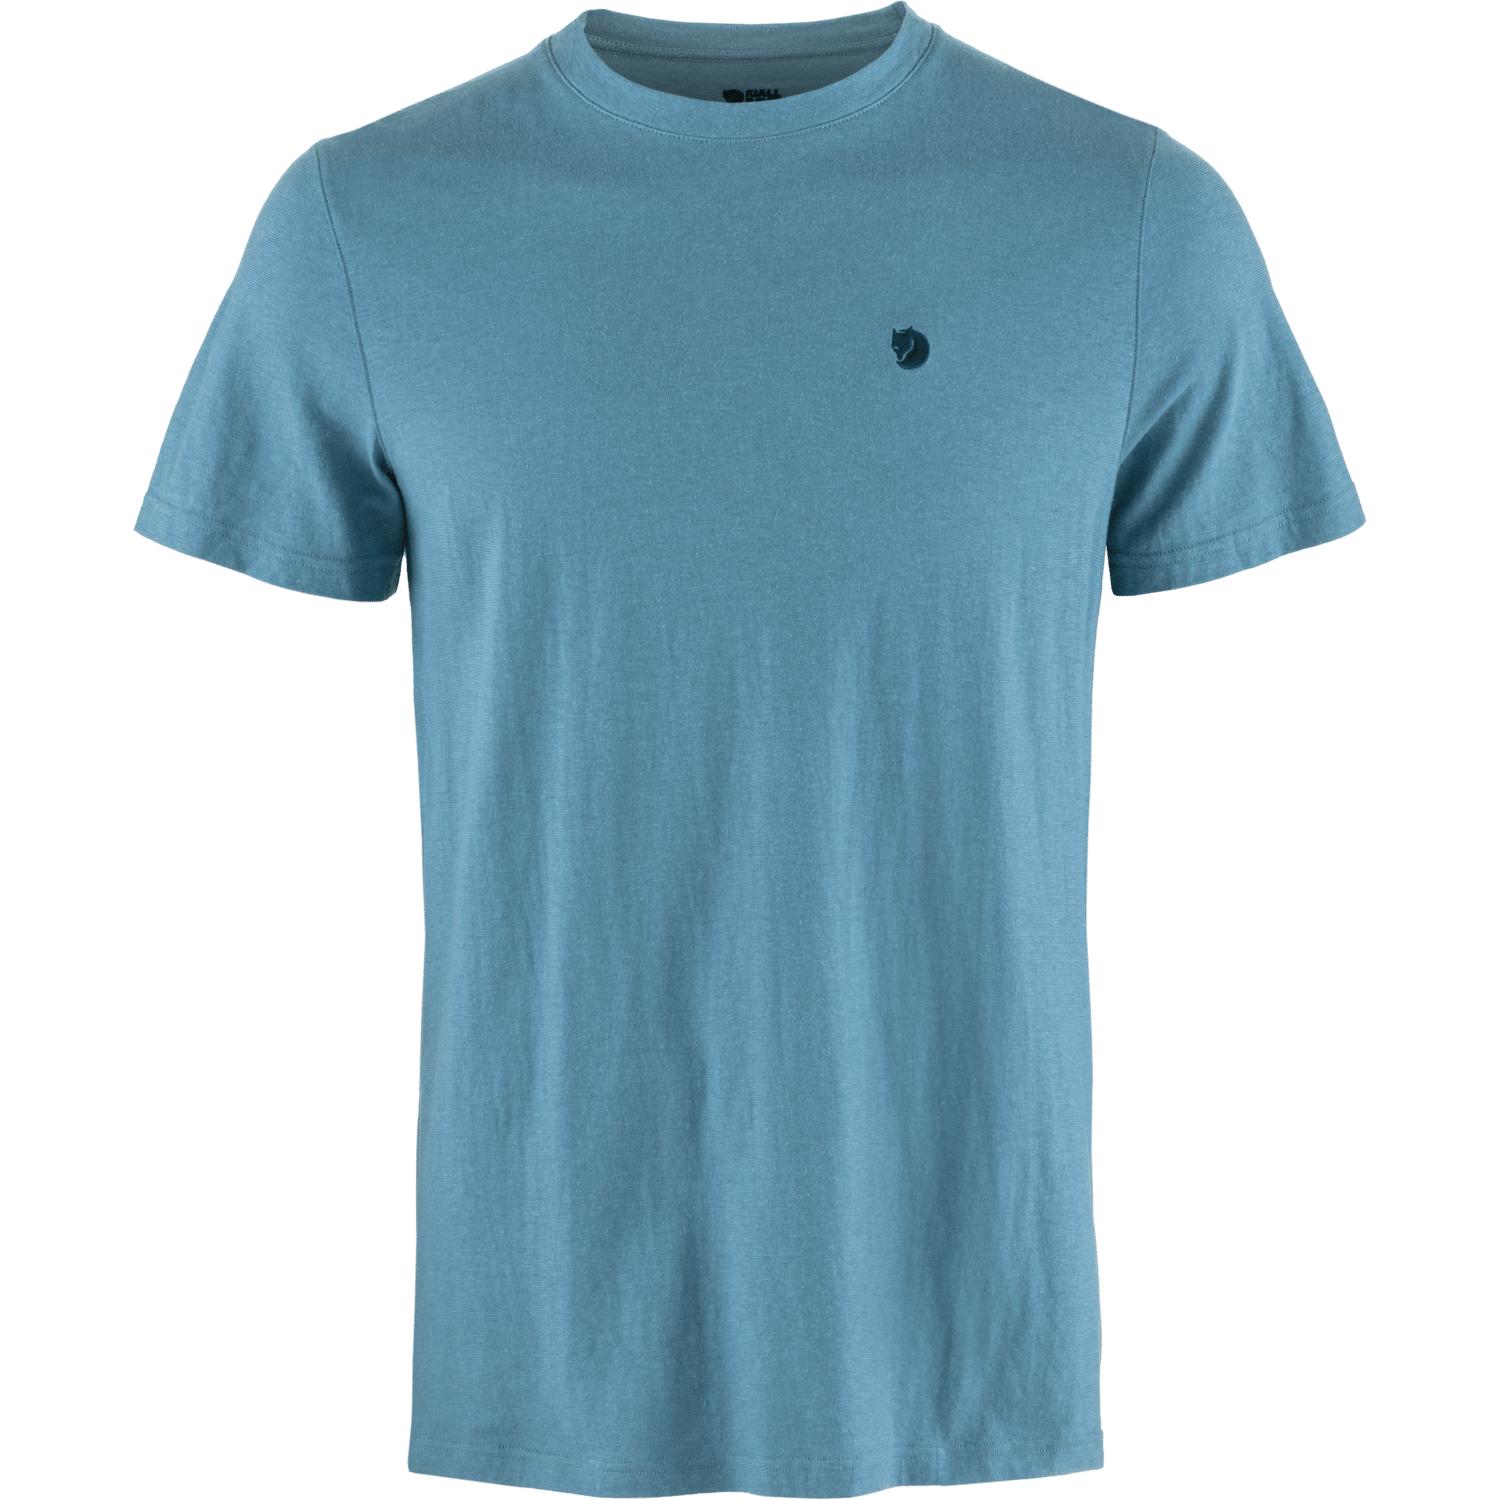 Fjällräven Men's Hemp Blend T-Shirt Dawn Blue